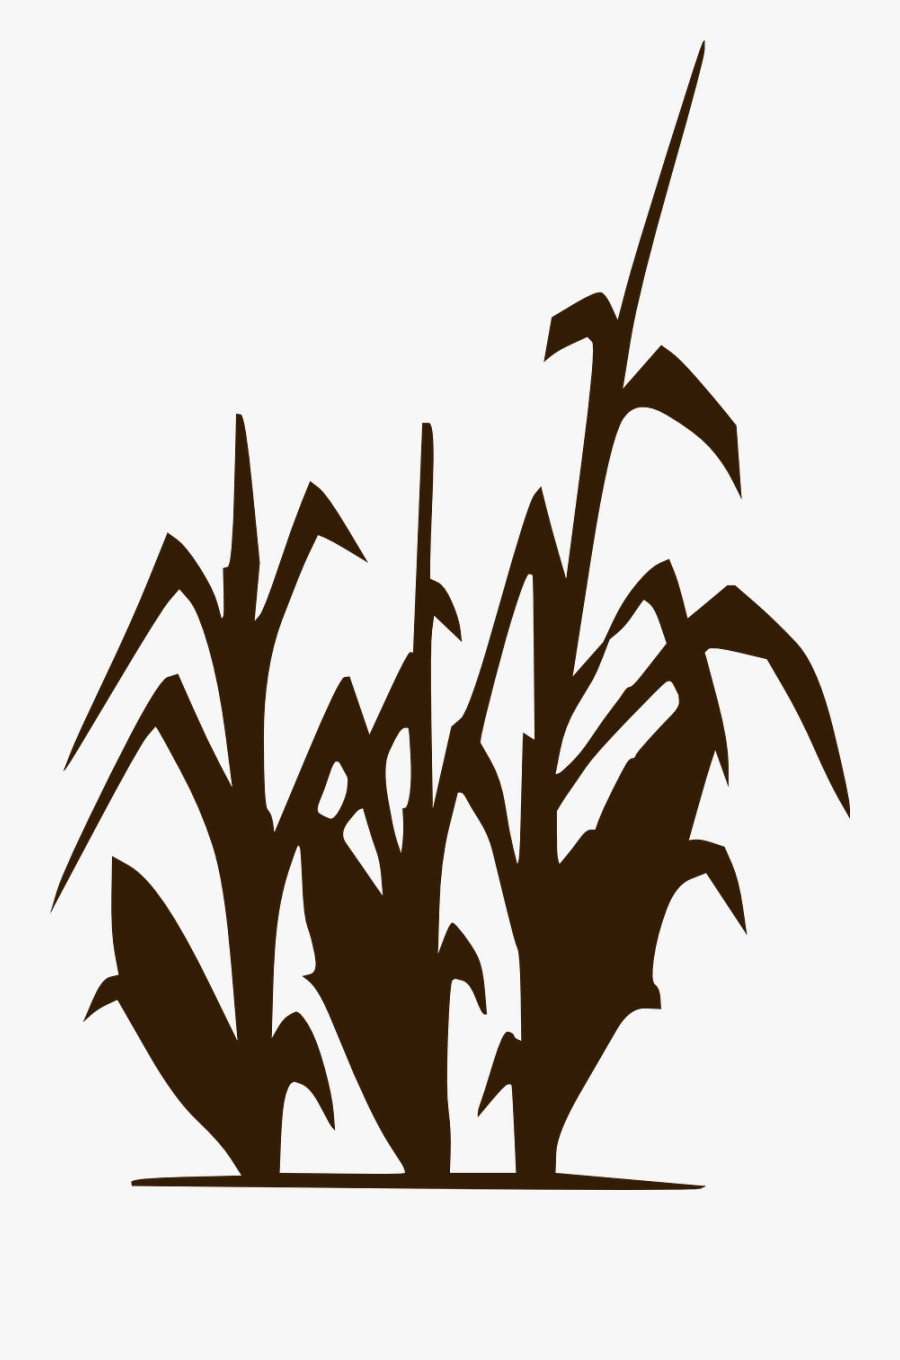 Harvest Clipart Harvest Crop - Corn Stalk Clipart Black And White, Transparent Clipart